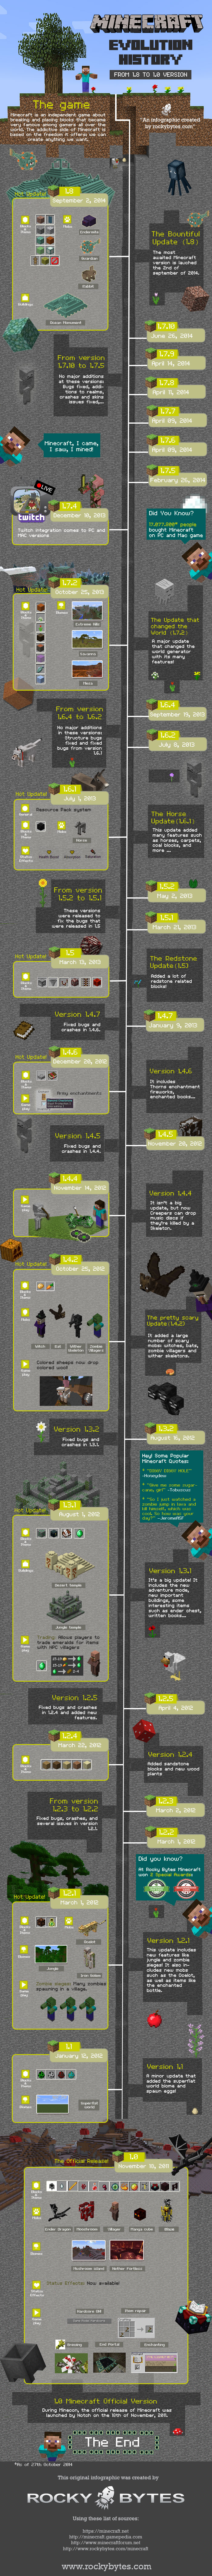 Minecraft Version History infographic